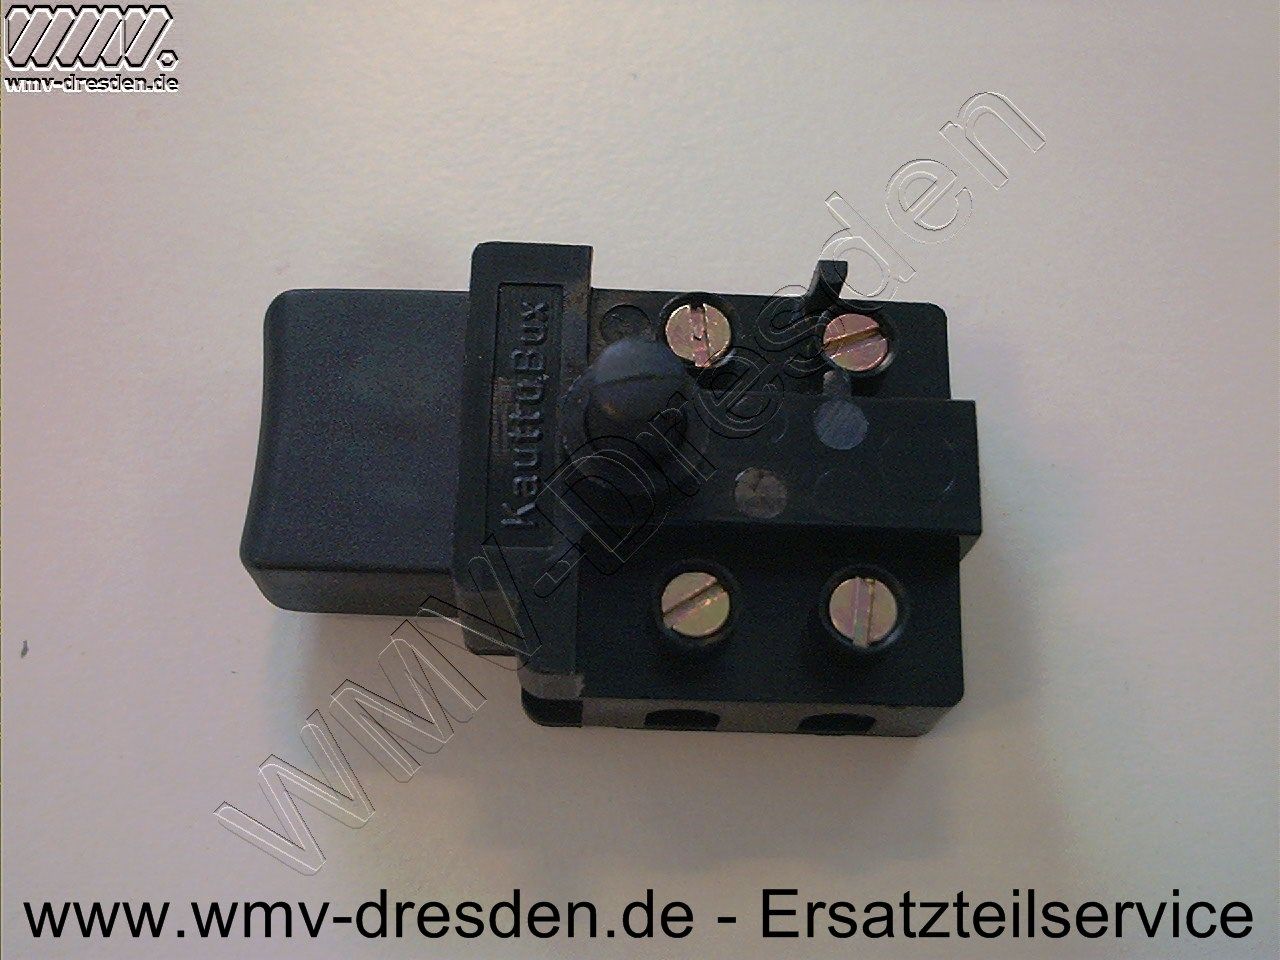 Artikel 1607200060-B17 Hersteller: Bosch-Skil-Dremel 